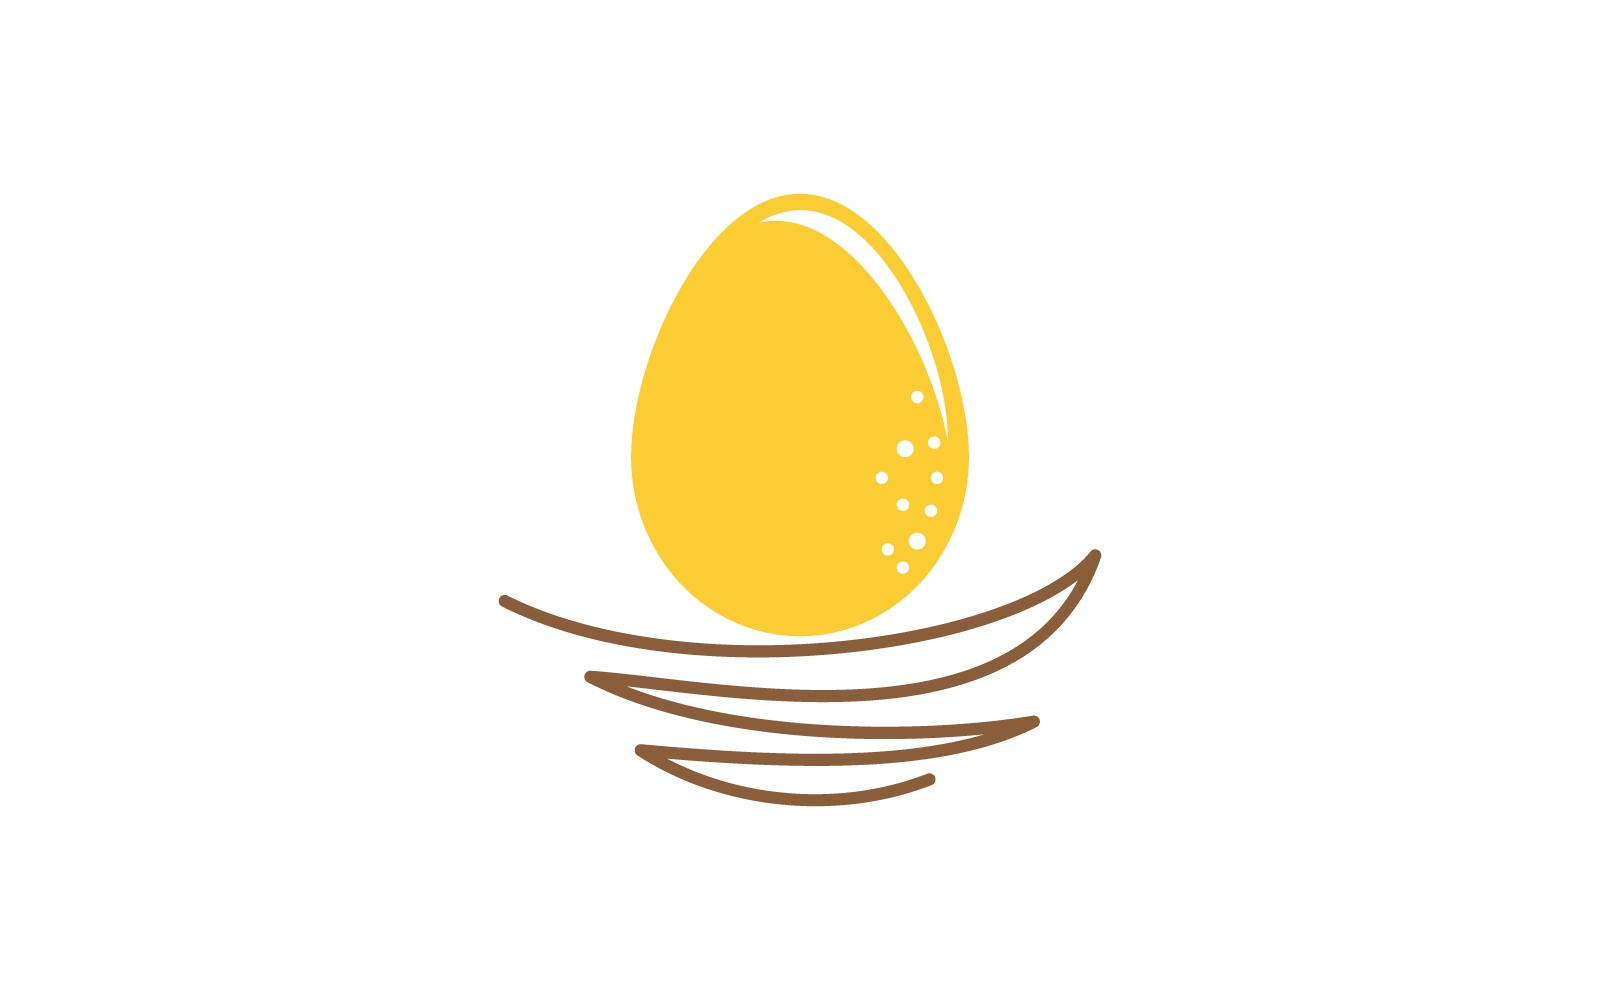 Yumurta illüstrasyon logo vektör düz tasarımı